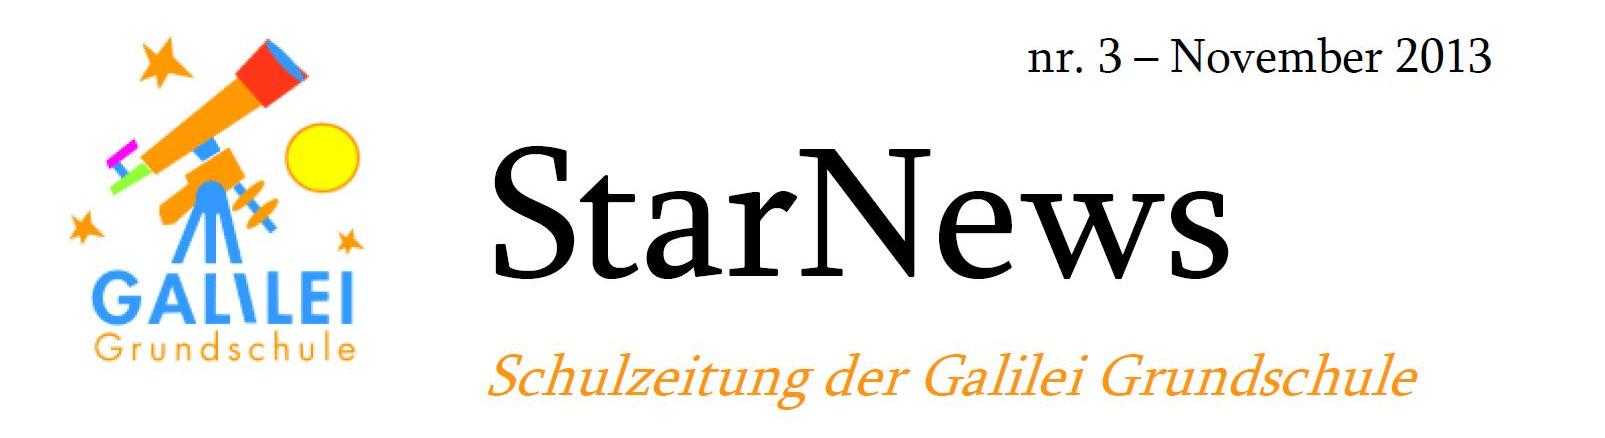 starnews